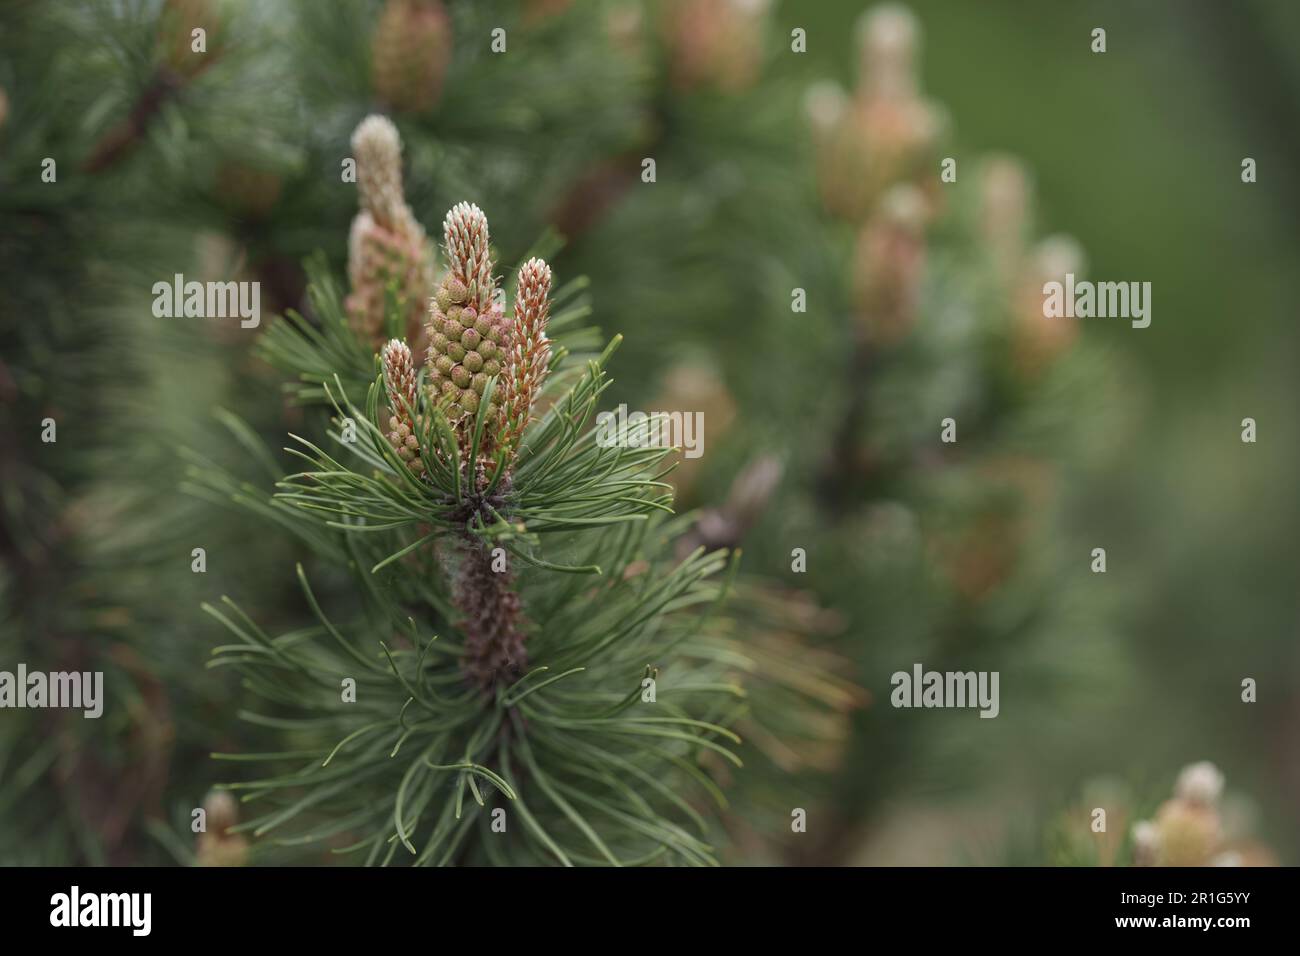 Blossomin pine tree closeup photo, shallow focus Stock Photo